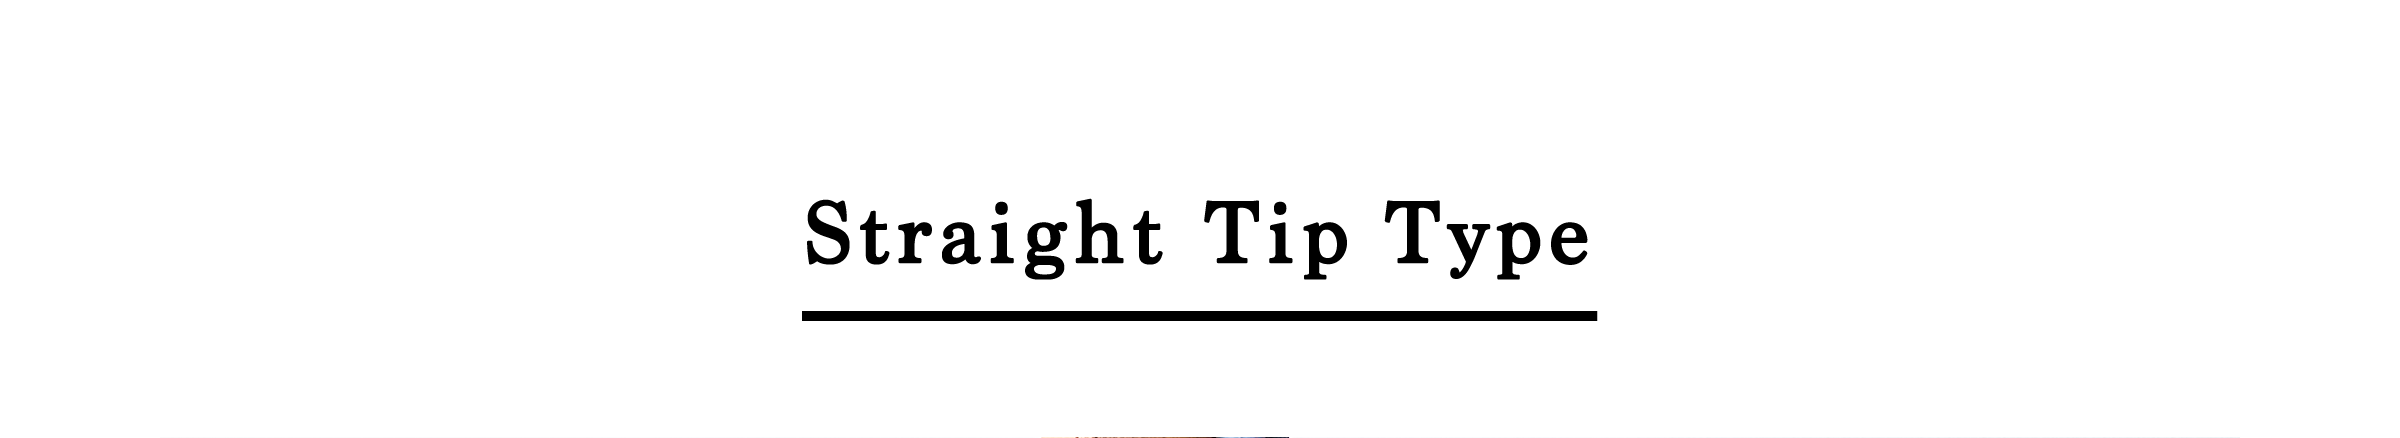 Straight Tip Type